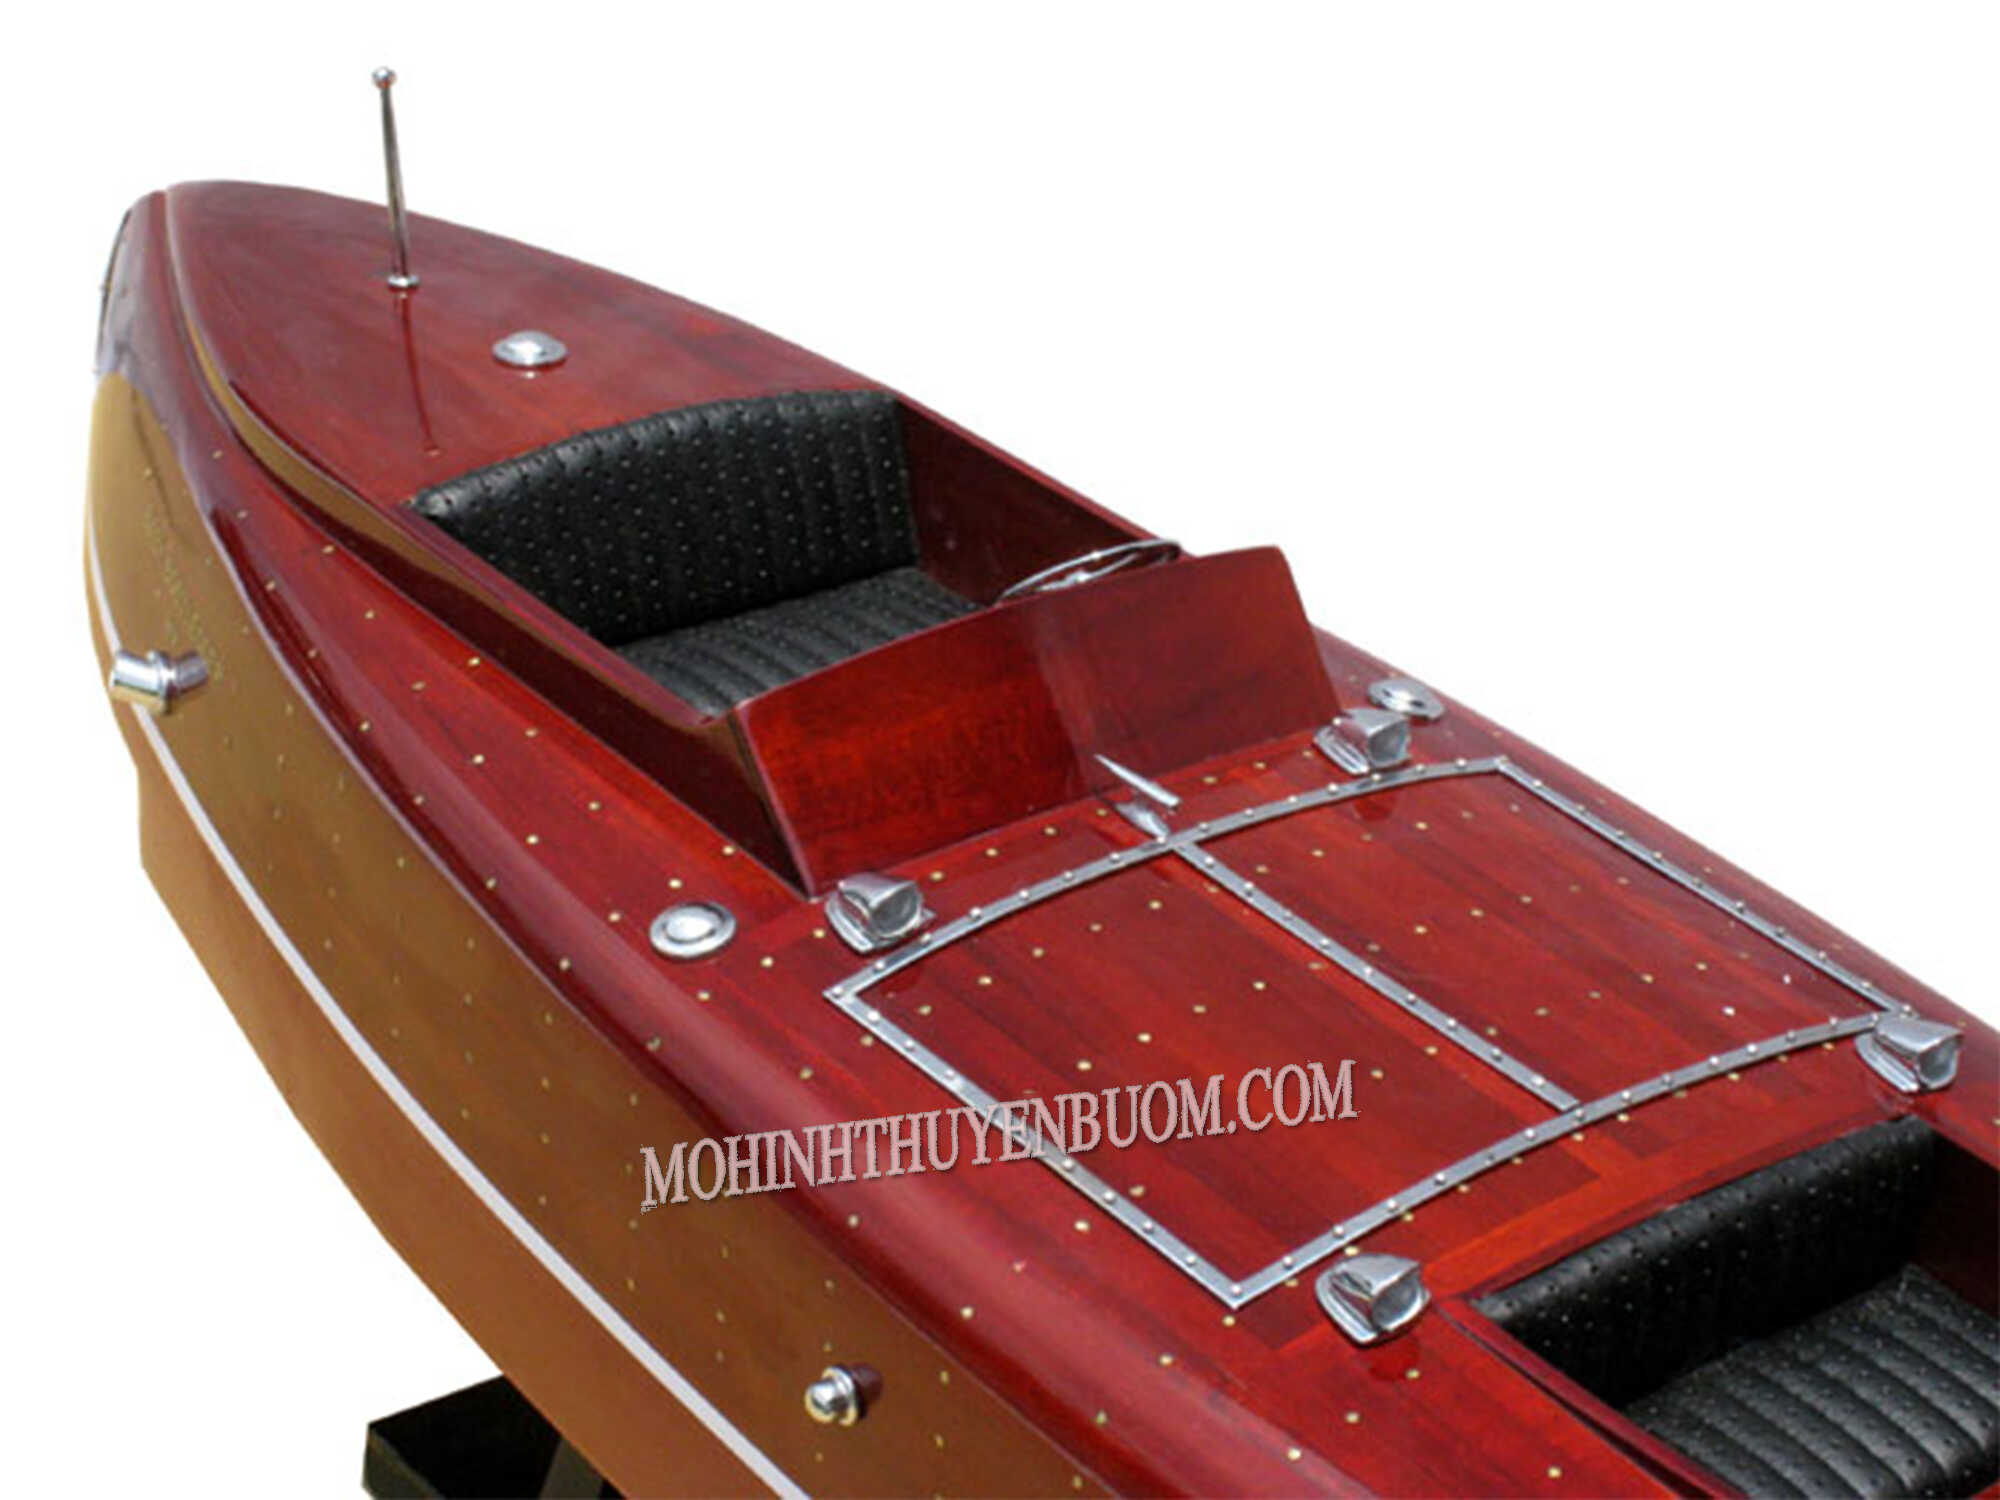 Classic Speed Boat Baby Bootlegger Model Lenght 90